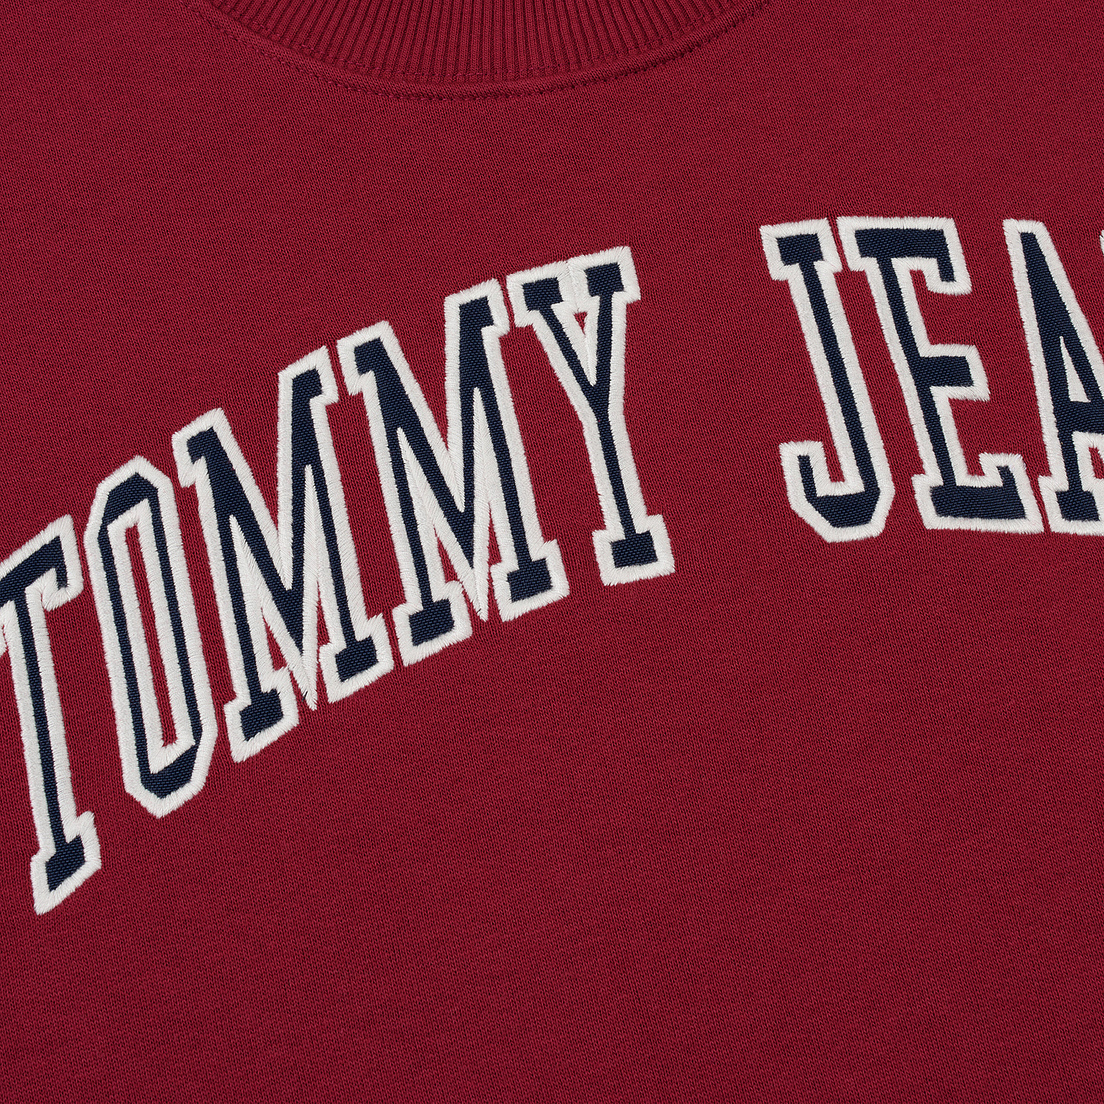 Tommy Jeans Женское платье Logo Sweat